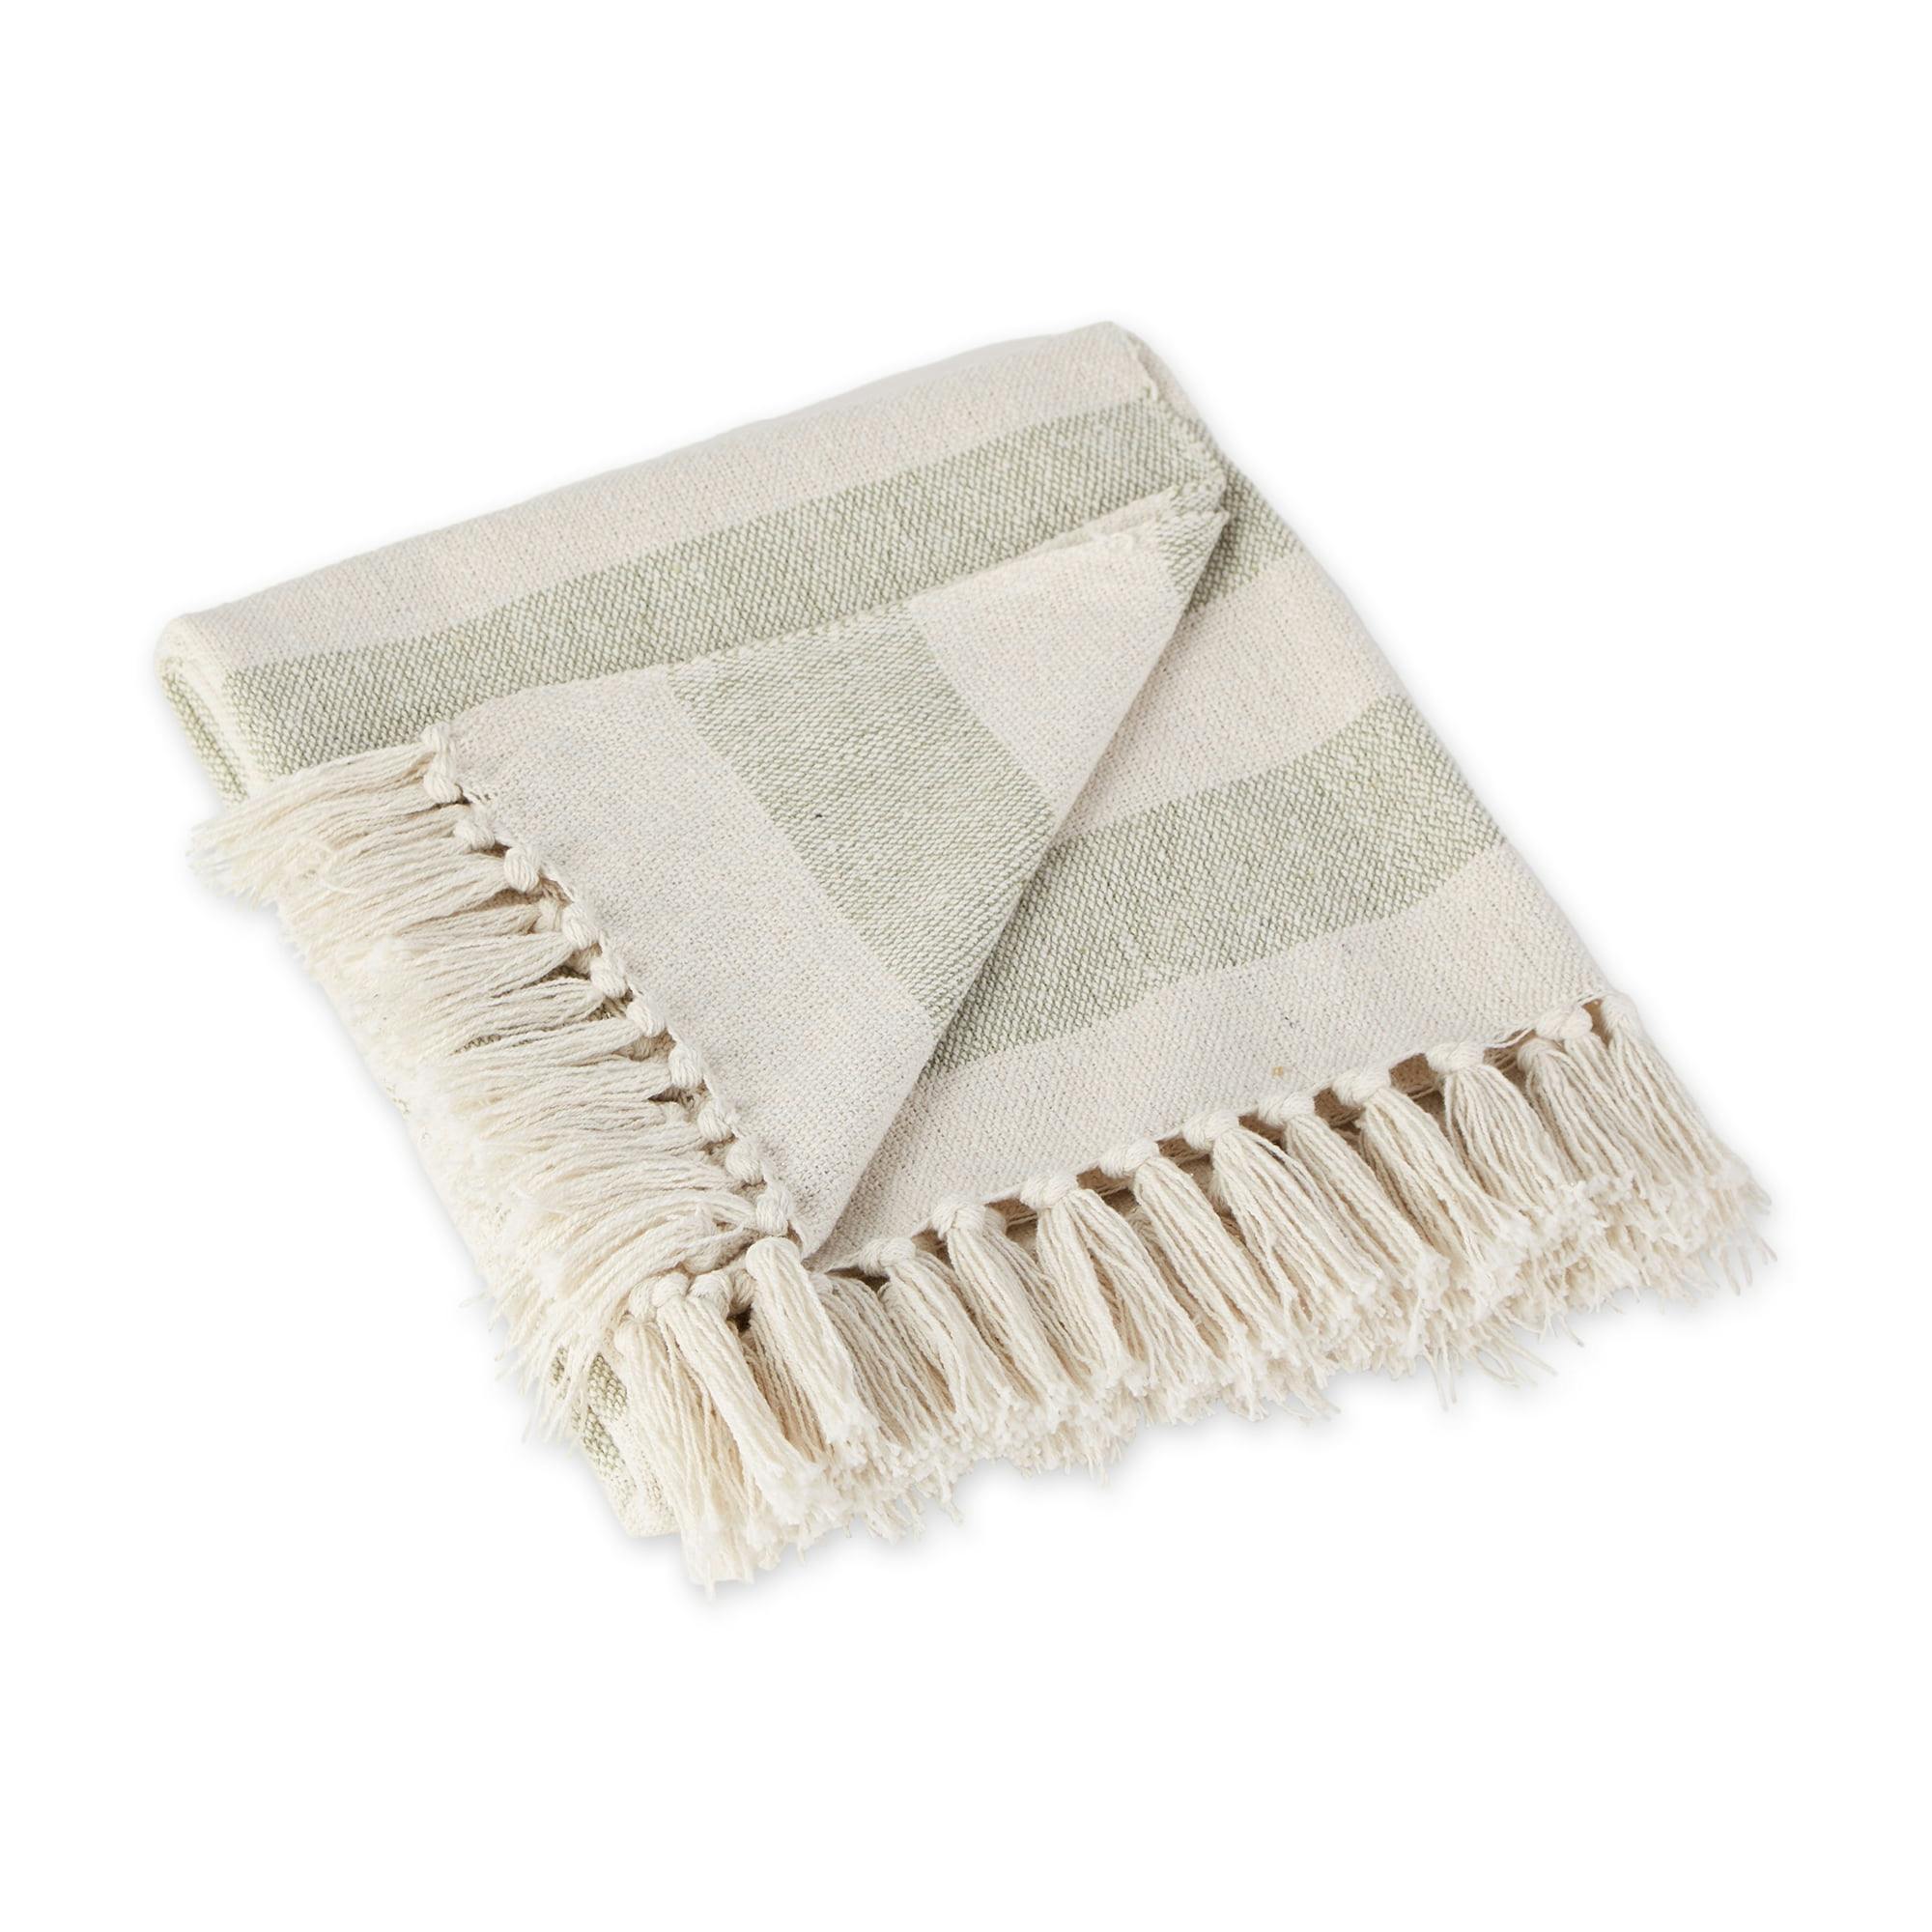 Artichoke and Cream Modern Cotton Stripe Throw Blanket 50x60"